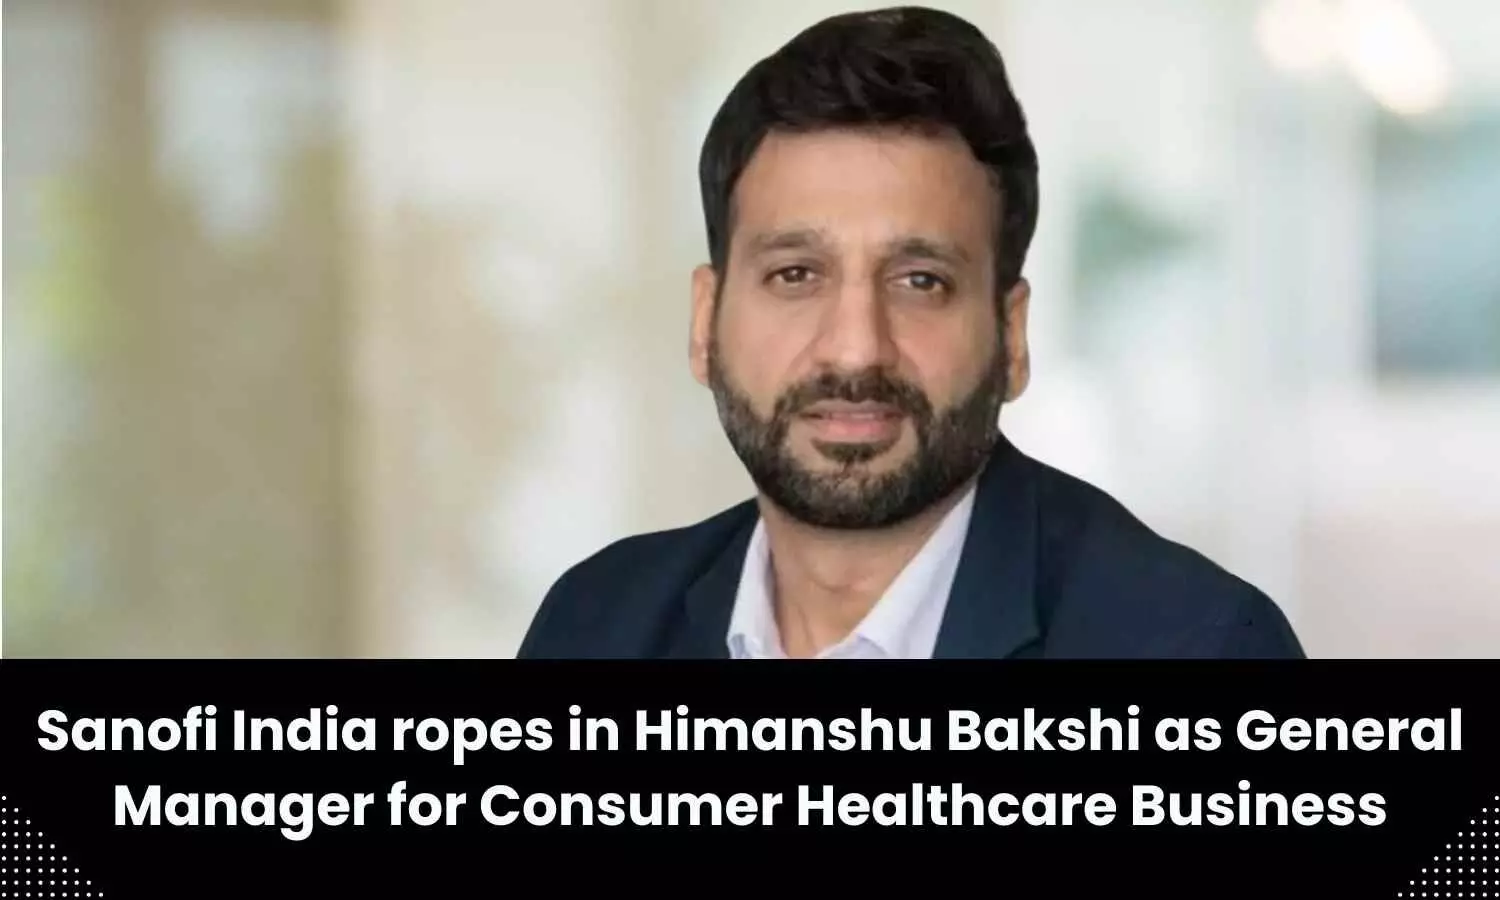 Sanofi India names Himanshu Bakshi as General Manager for Consumer Healthcare Business